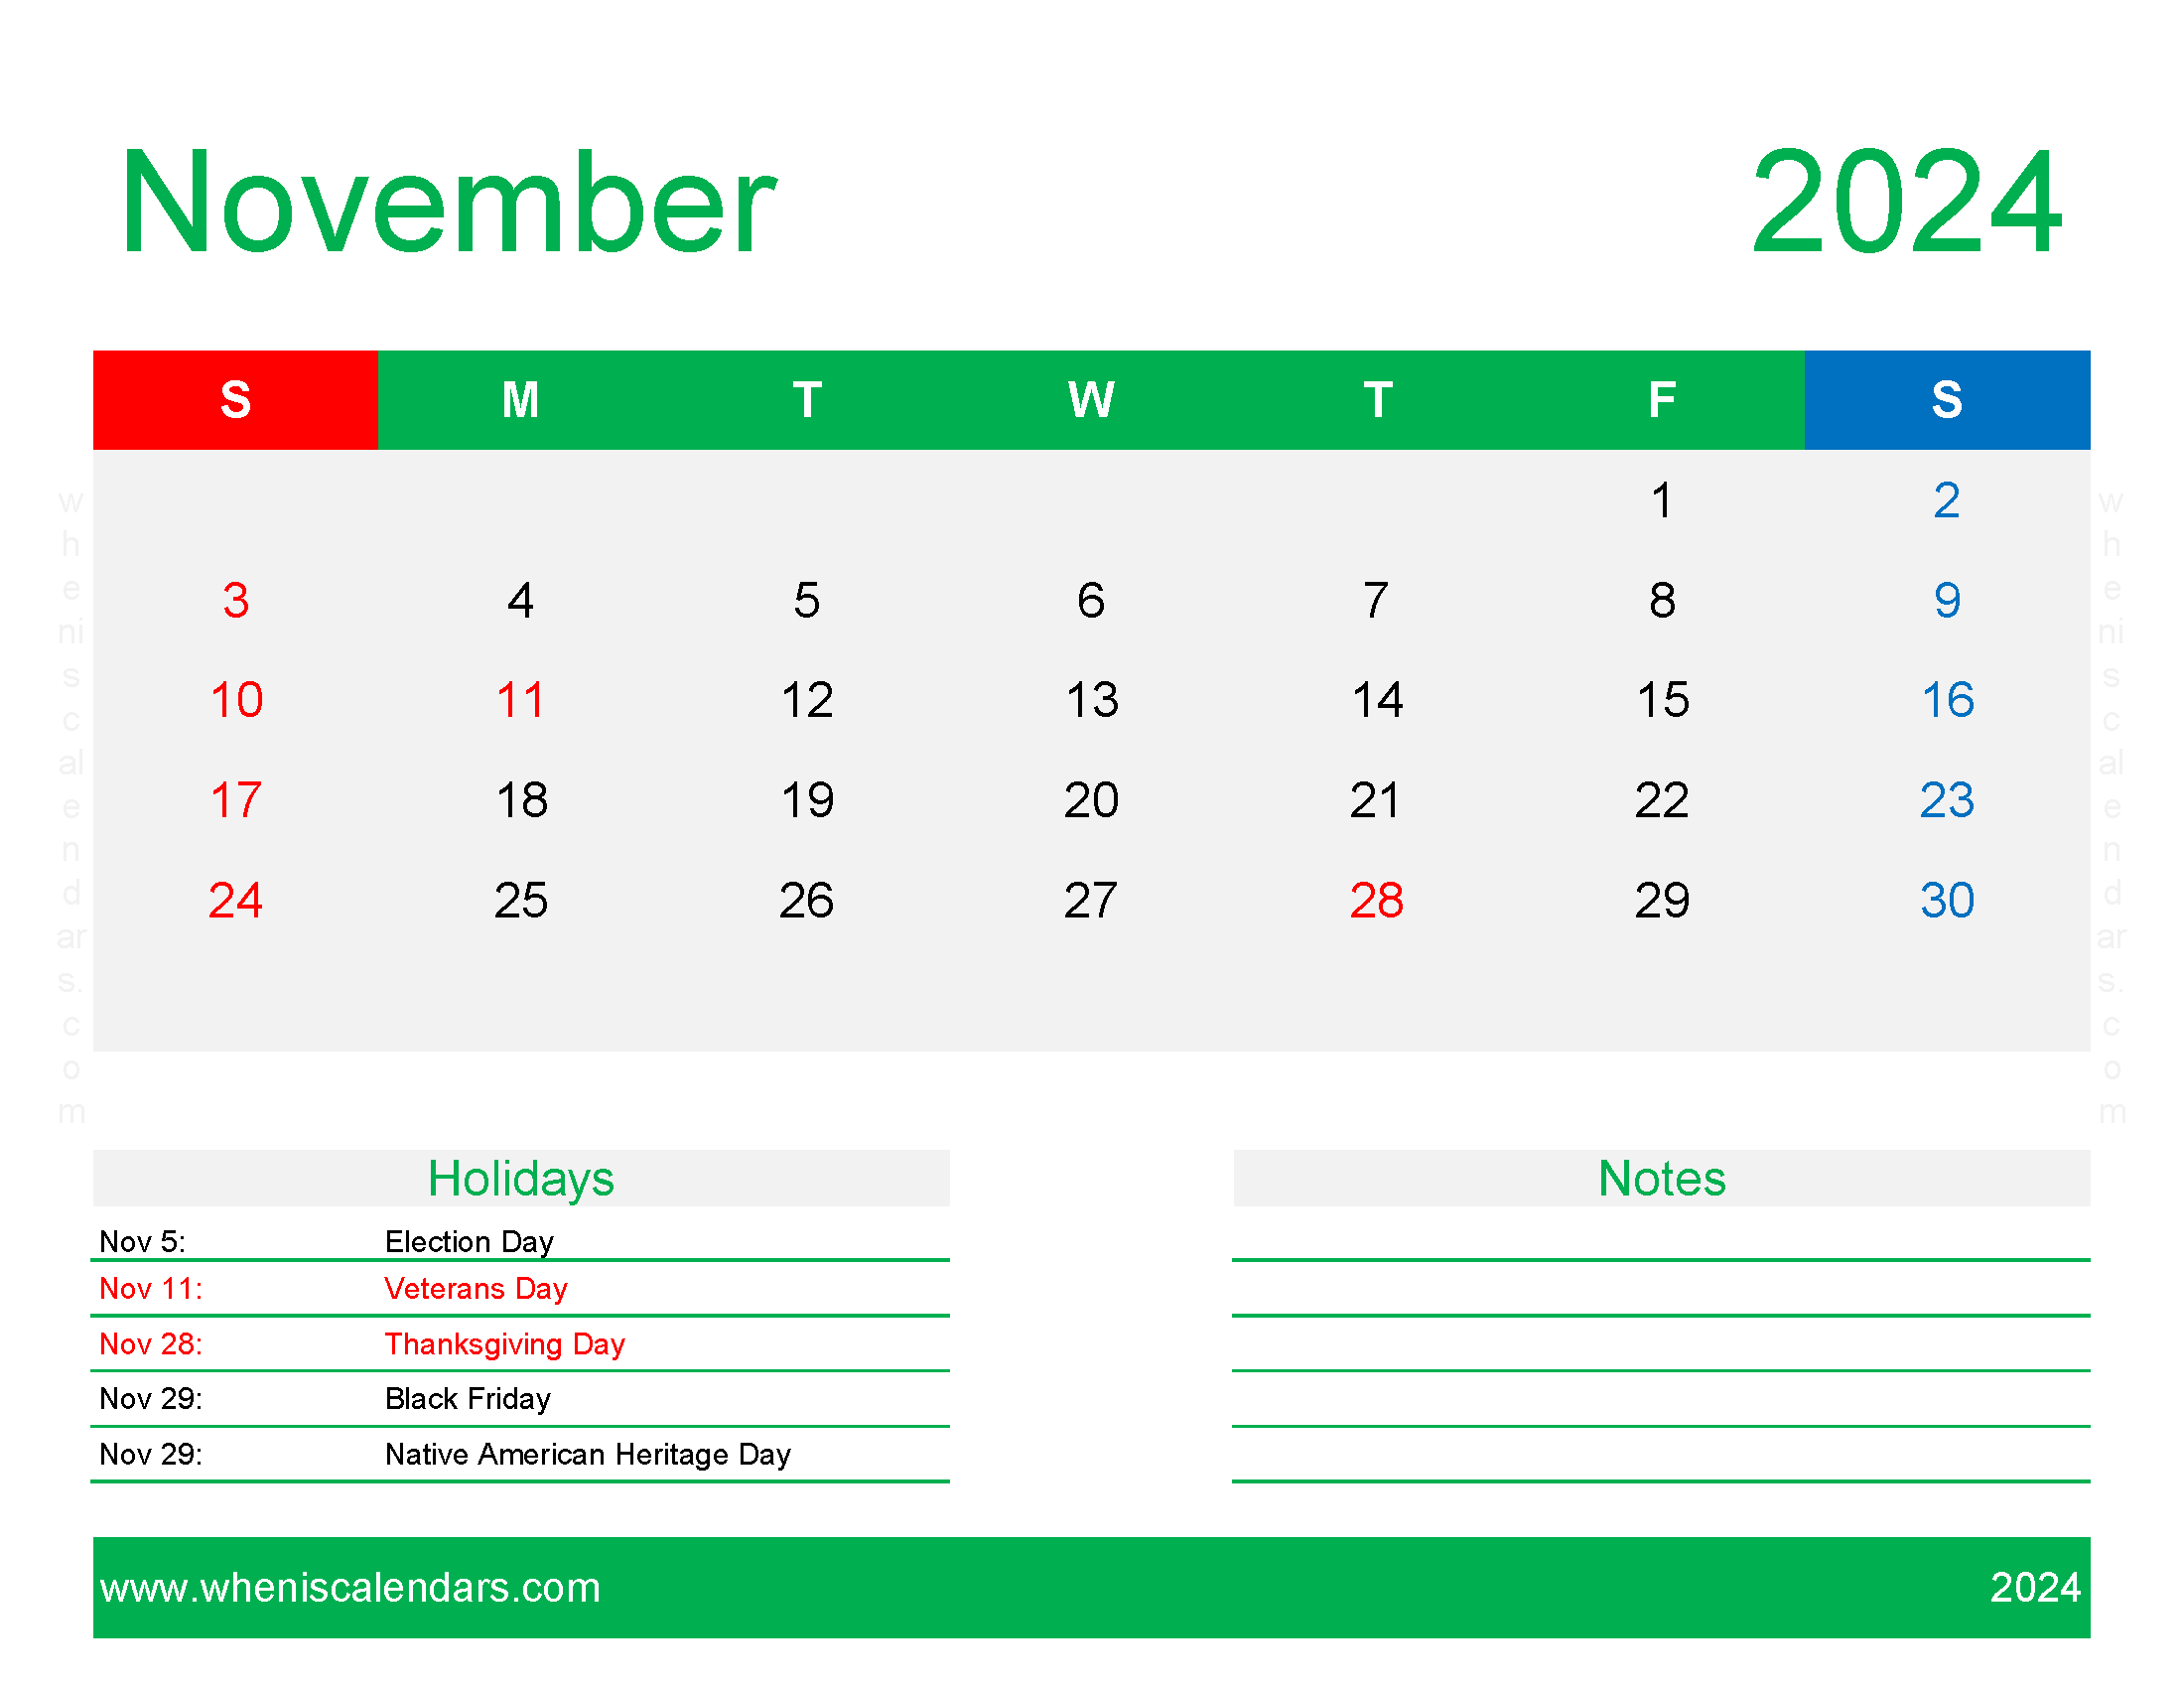 Download free November Calendar 2024 with Holidays printable